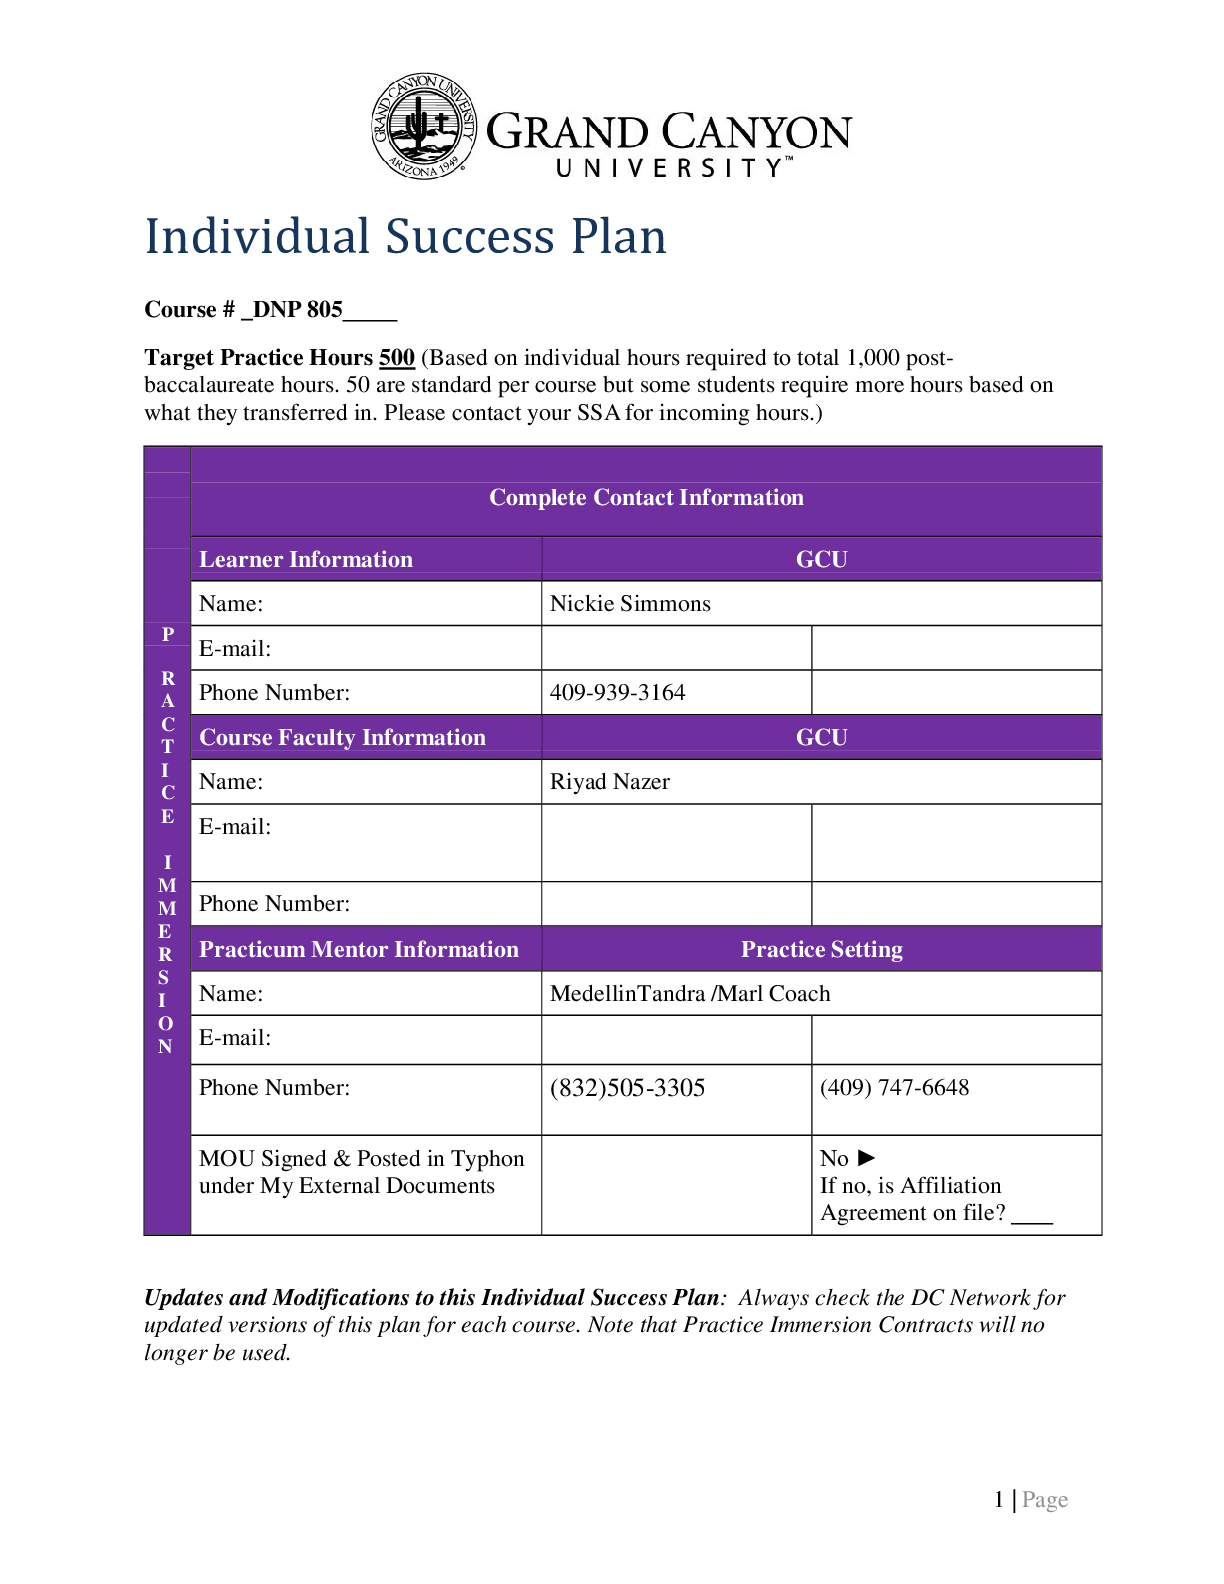 Individual Success Plan Student Document DNP805 docx pdf